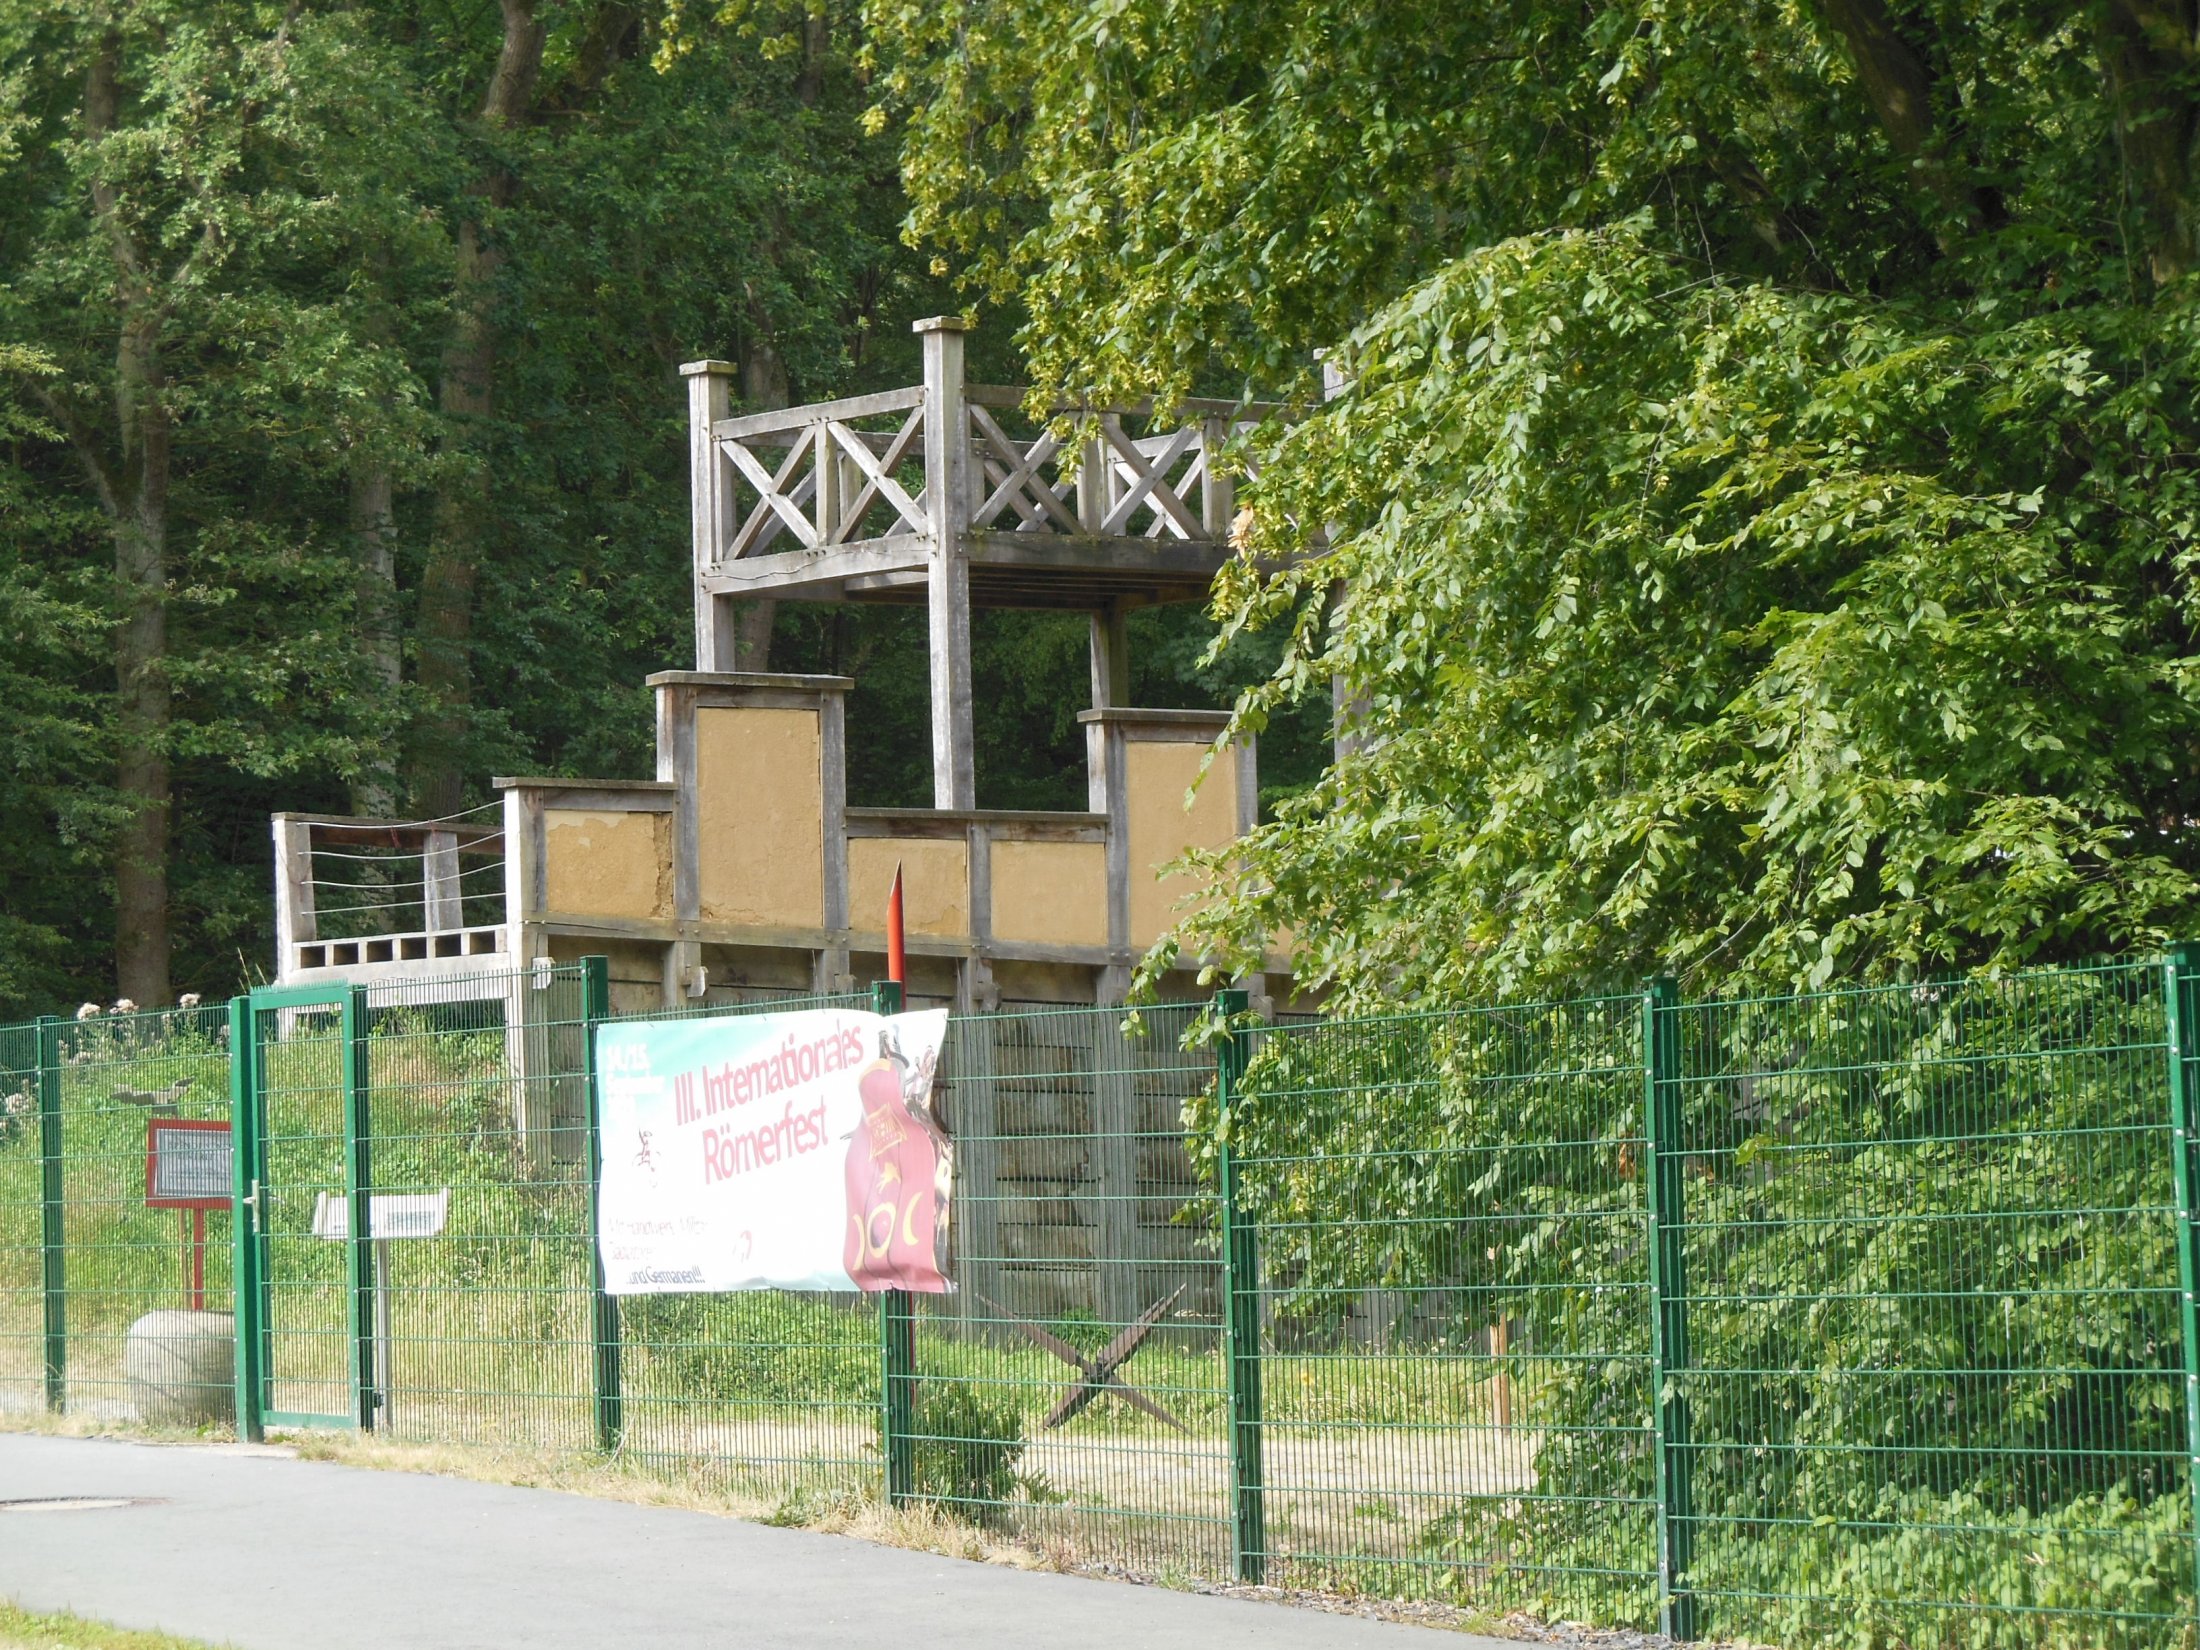 Römerpark Bergkamen